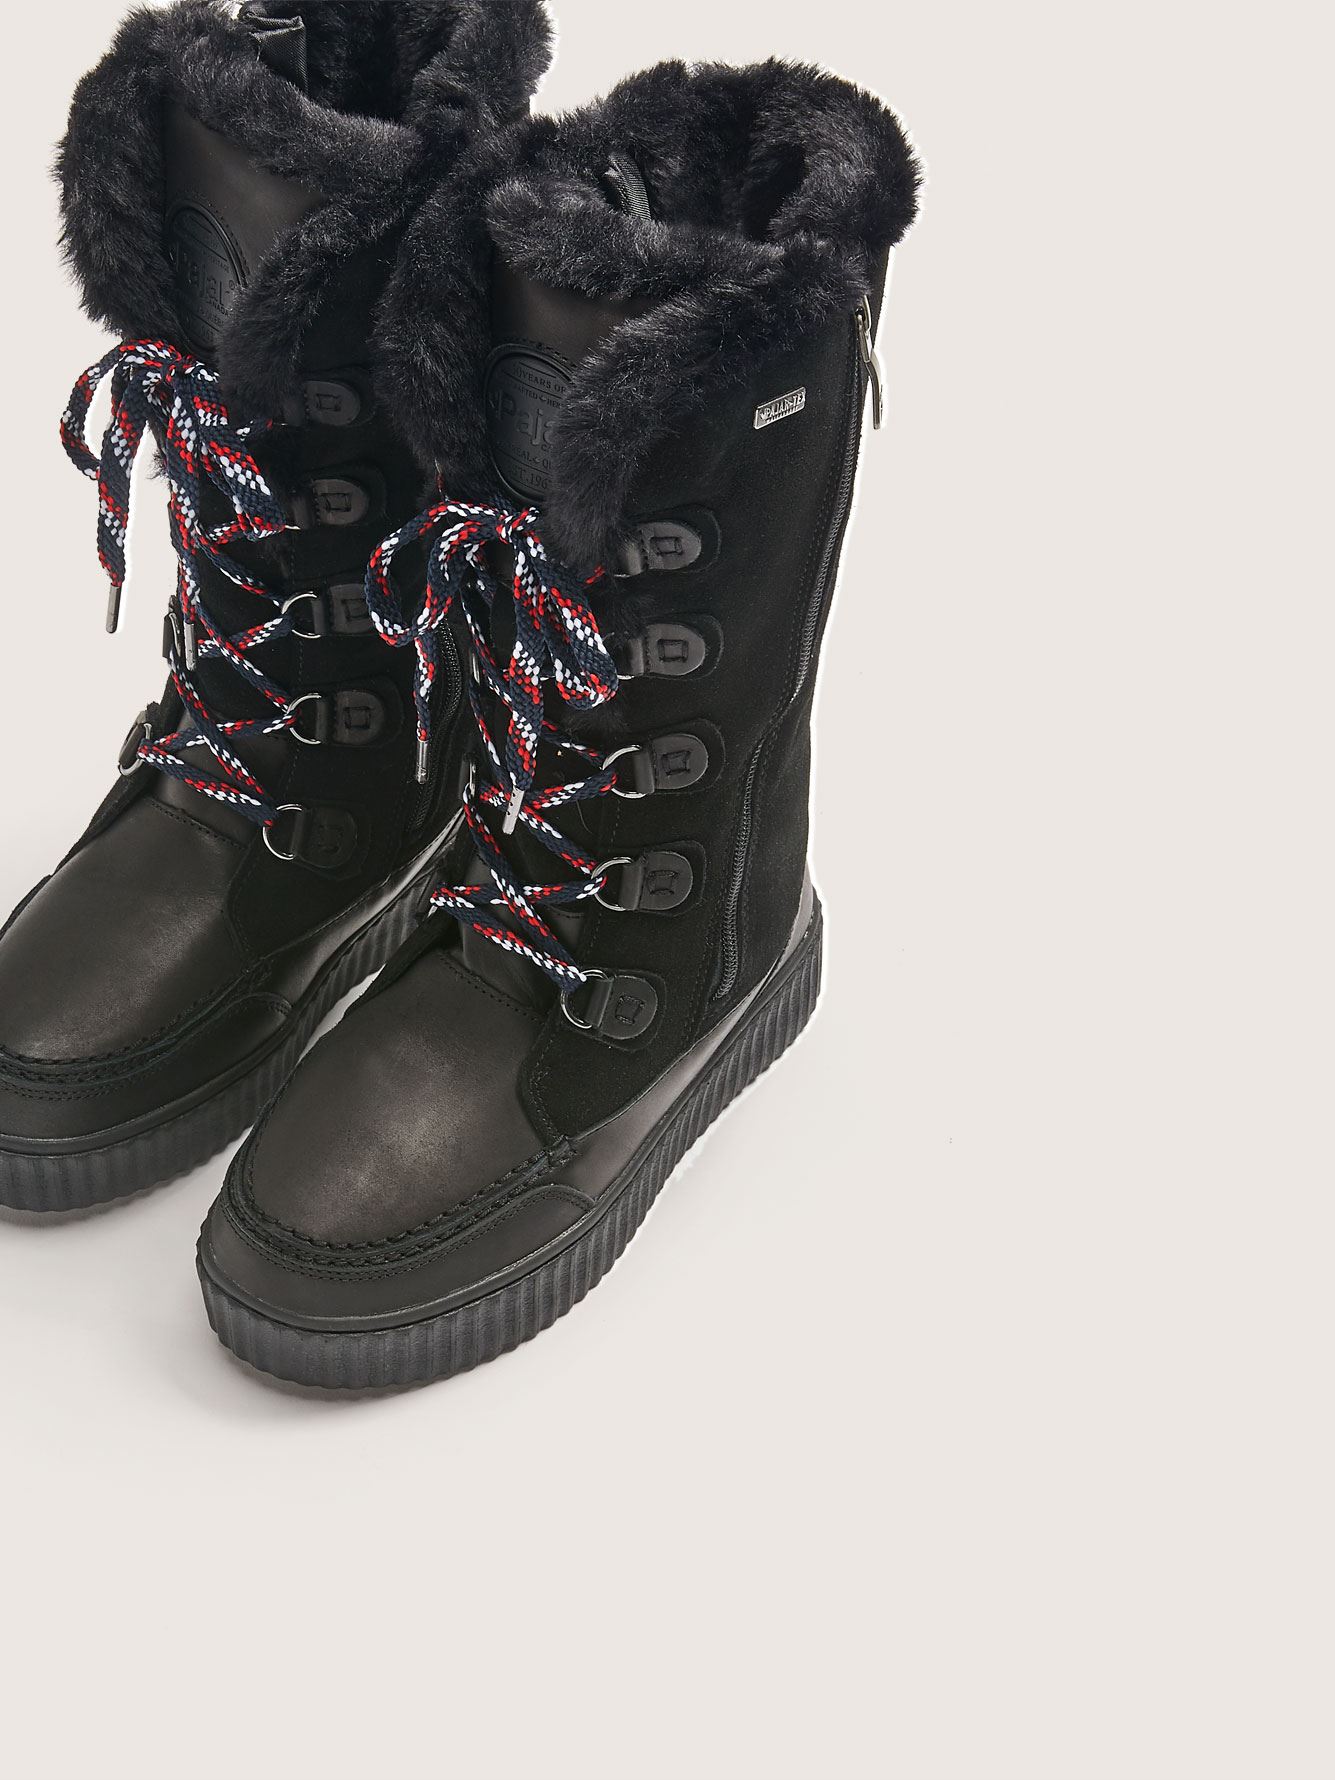 pajar winter boots